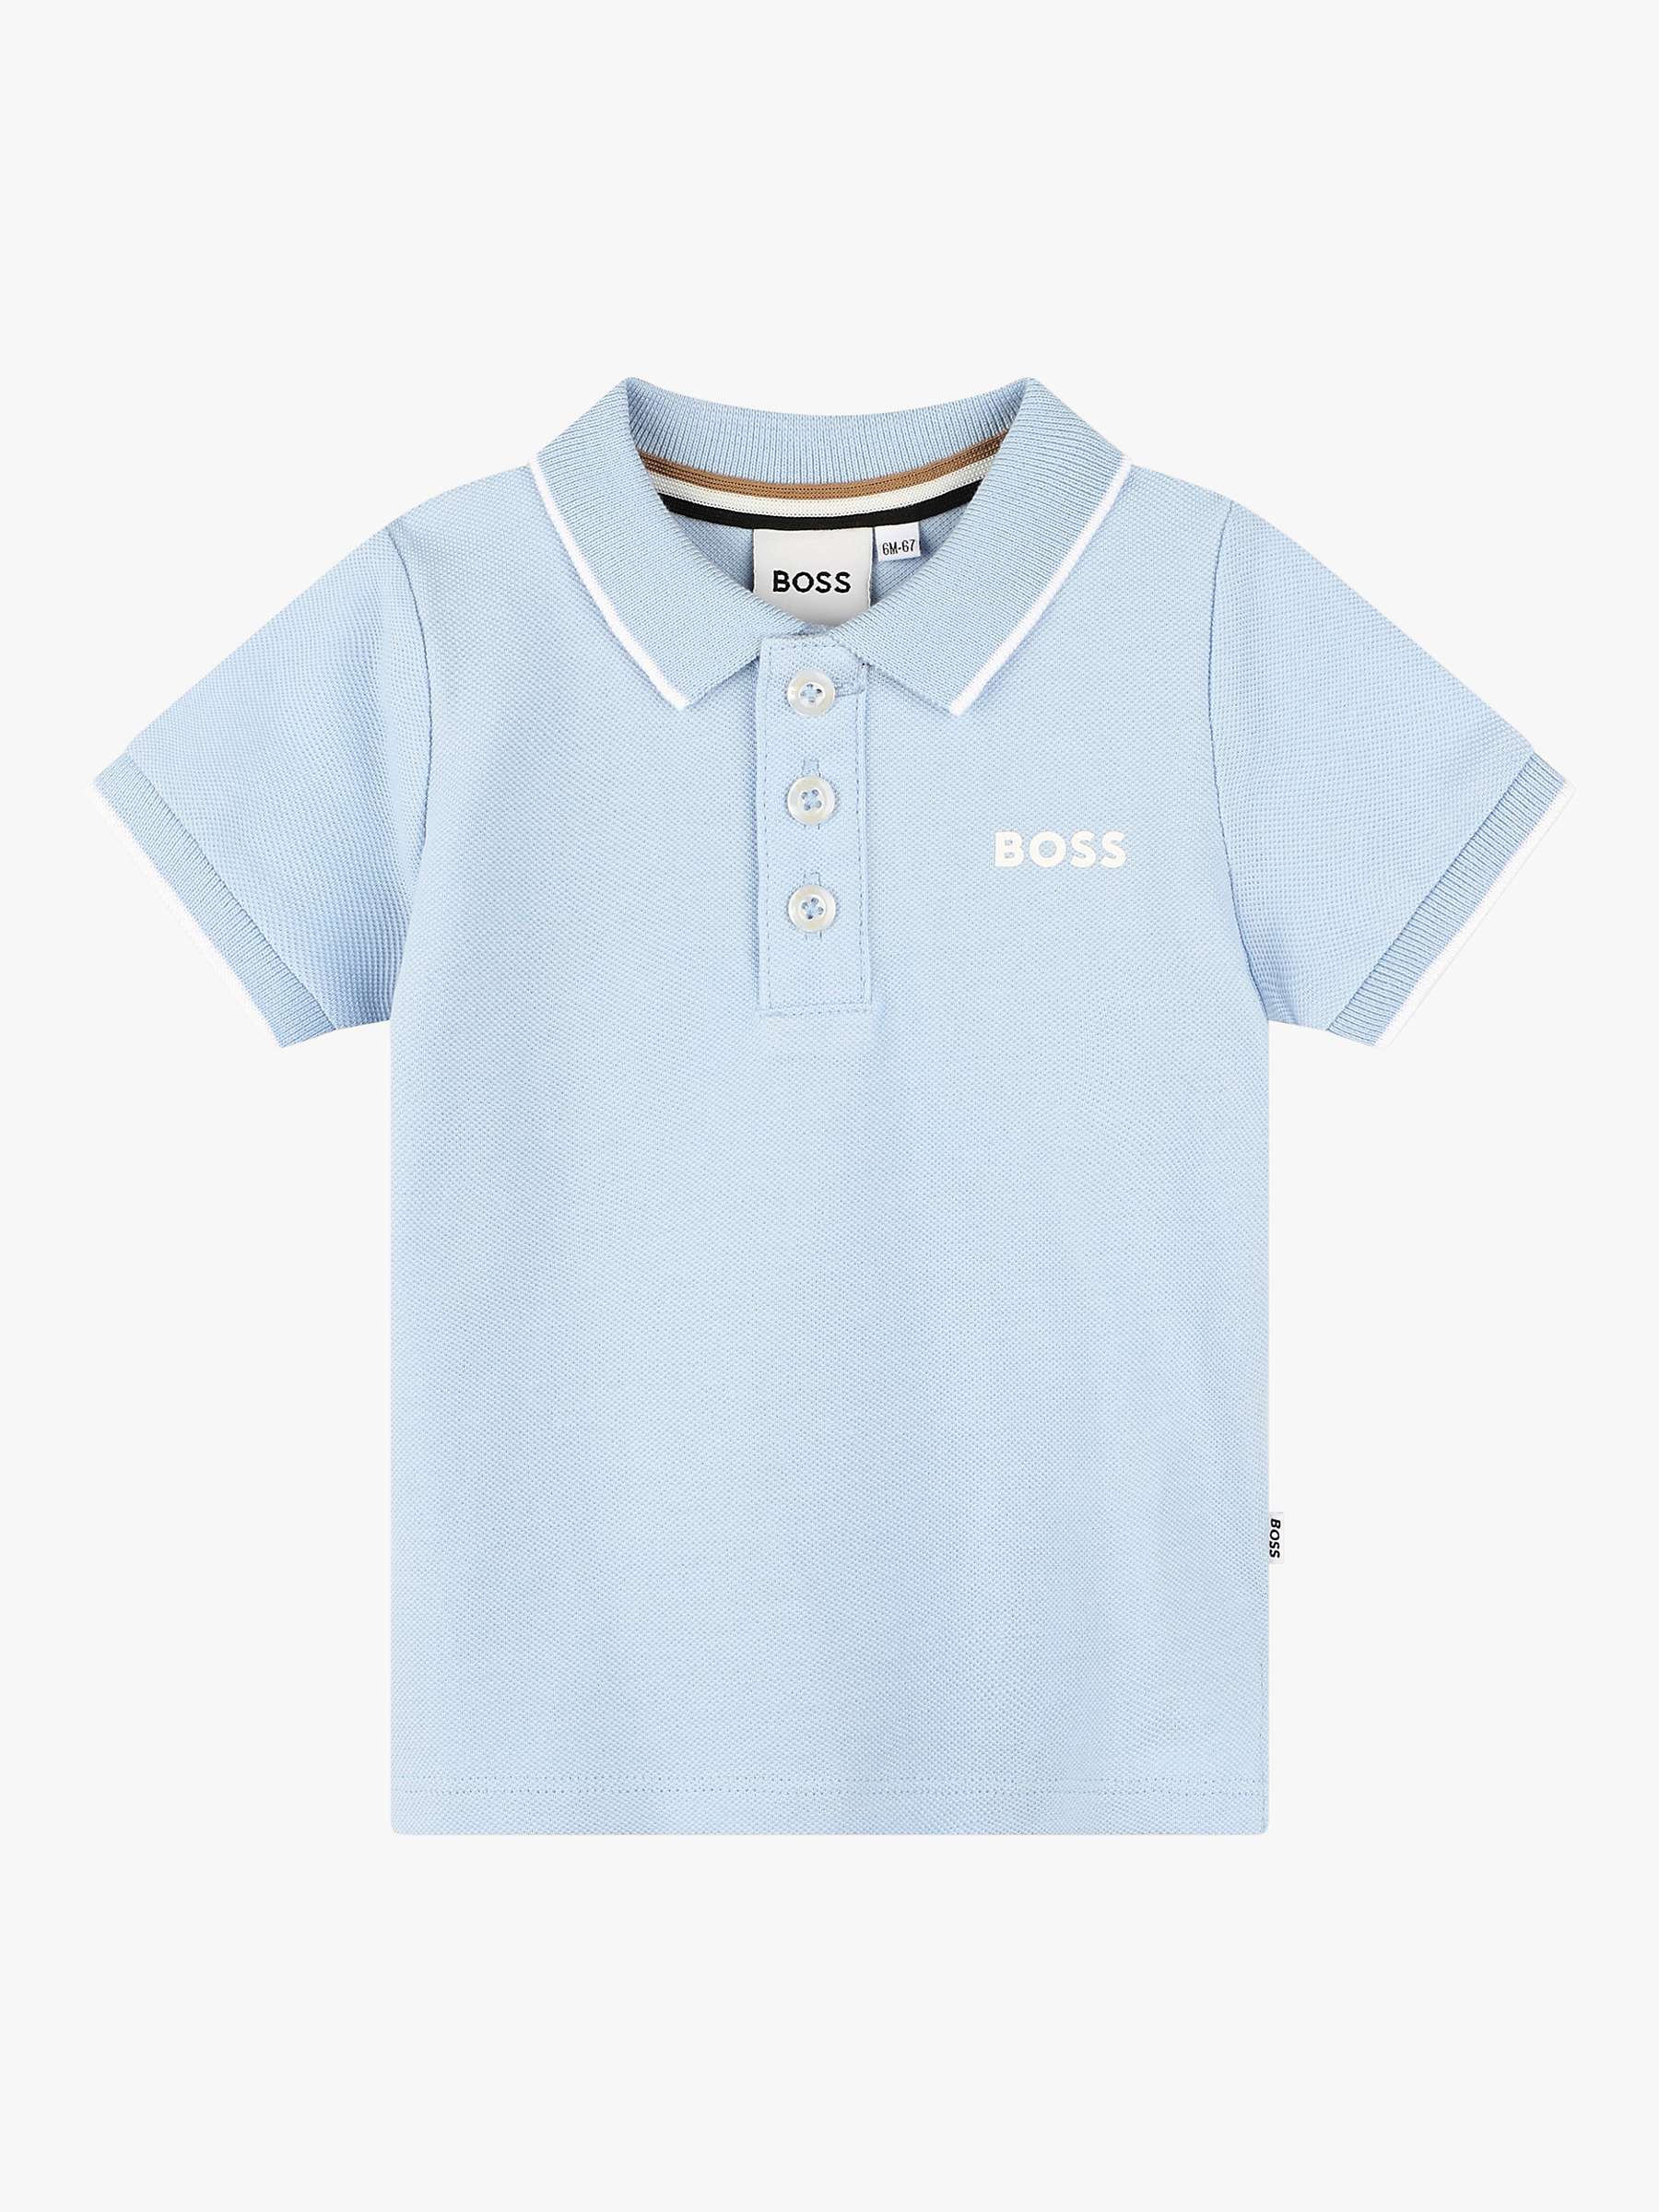 Buy BOSS Kids' Short Sleeve Polo Top Online at johnlewis.com